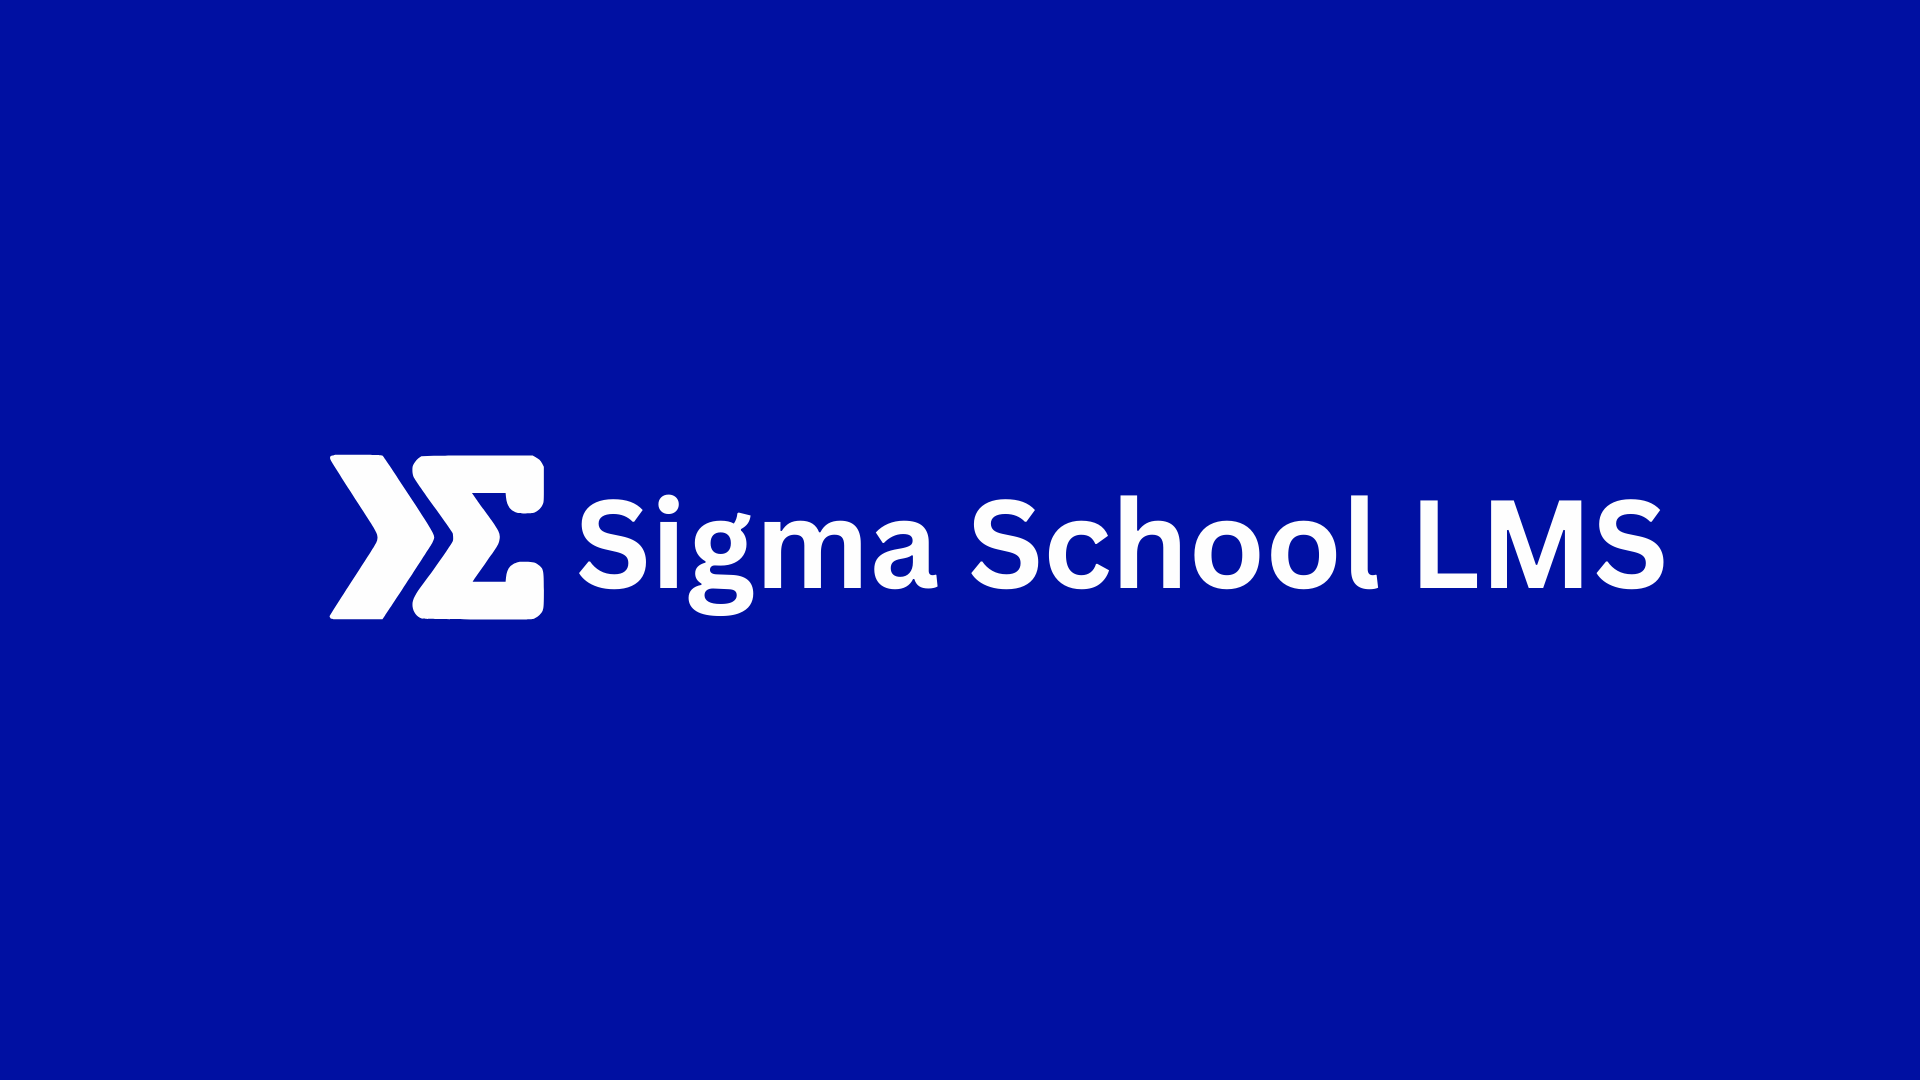 Sigma School LMS Image 1